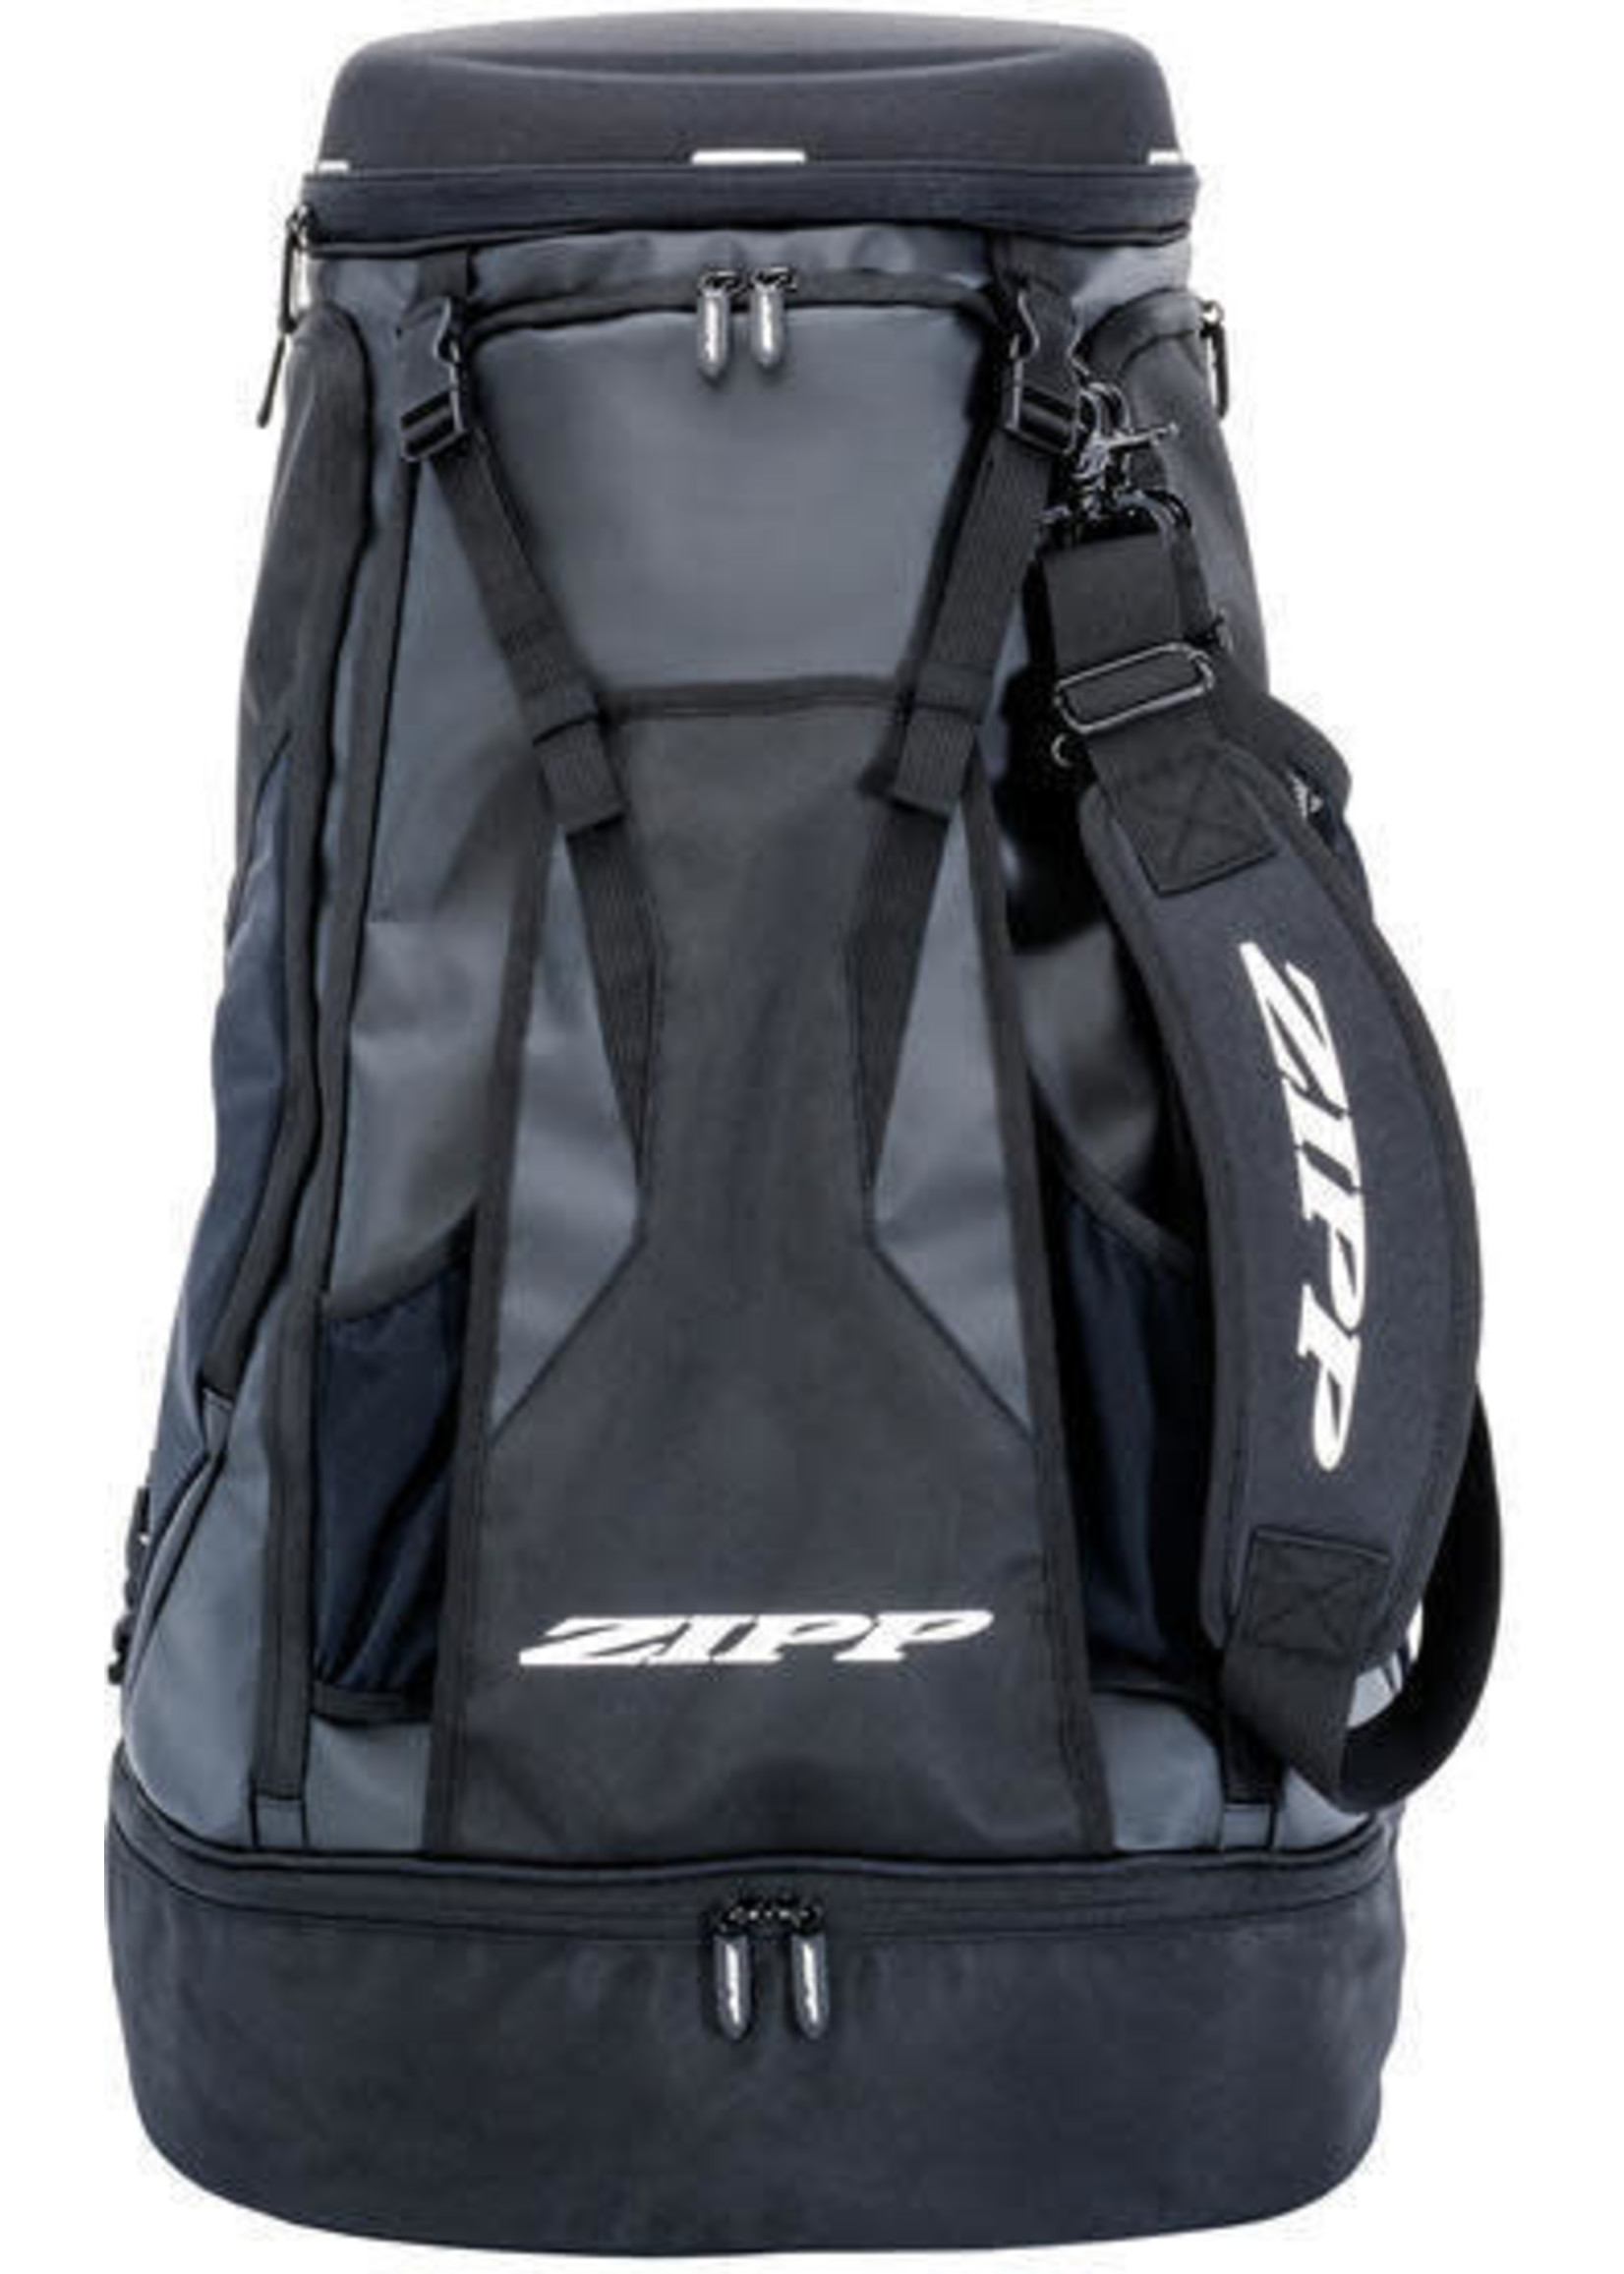 Zipp Zipp Transition 1 Gear Bag (includes shoulder strap)